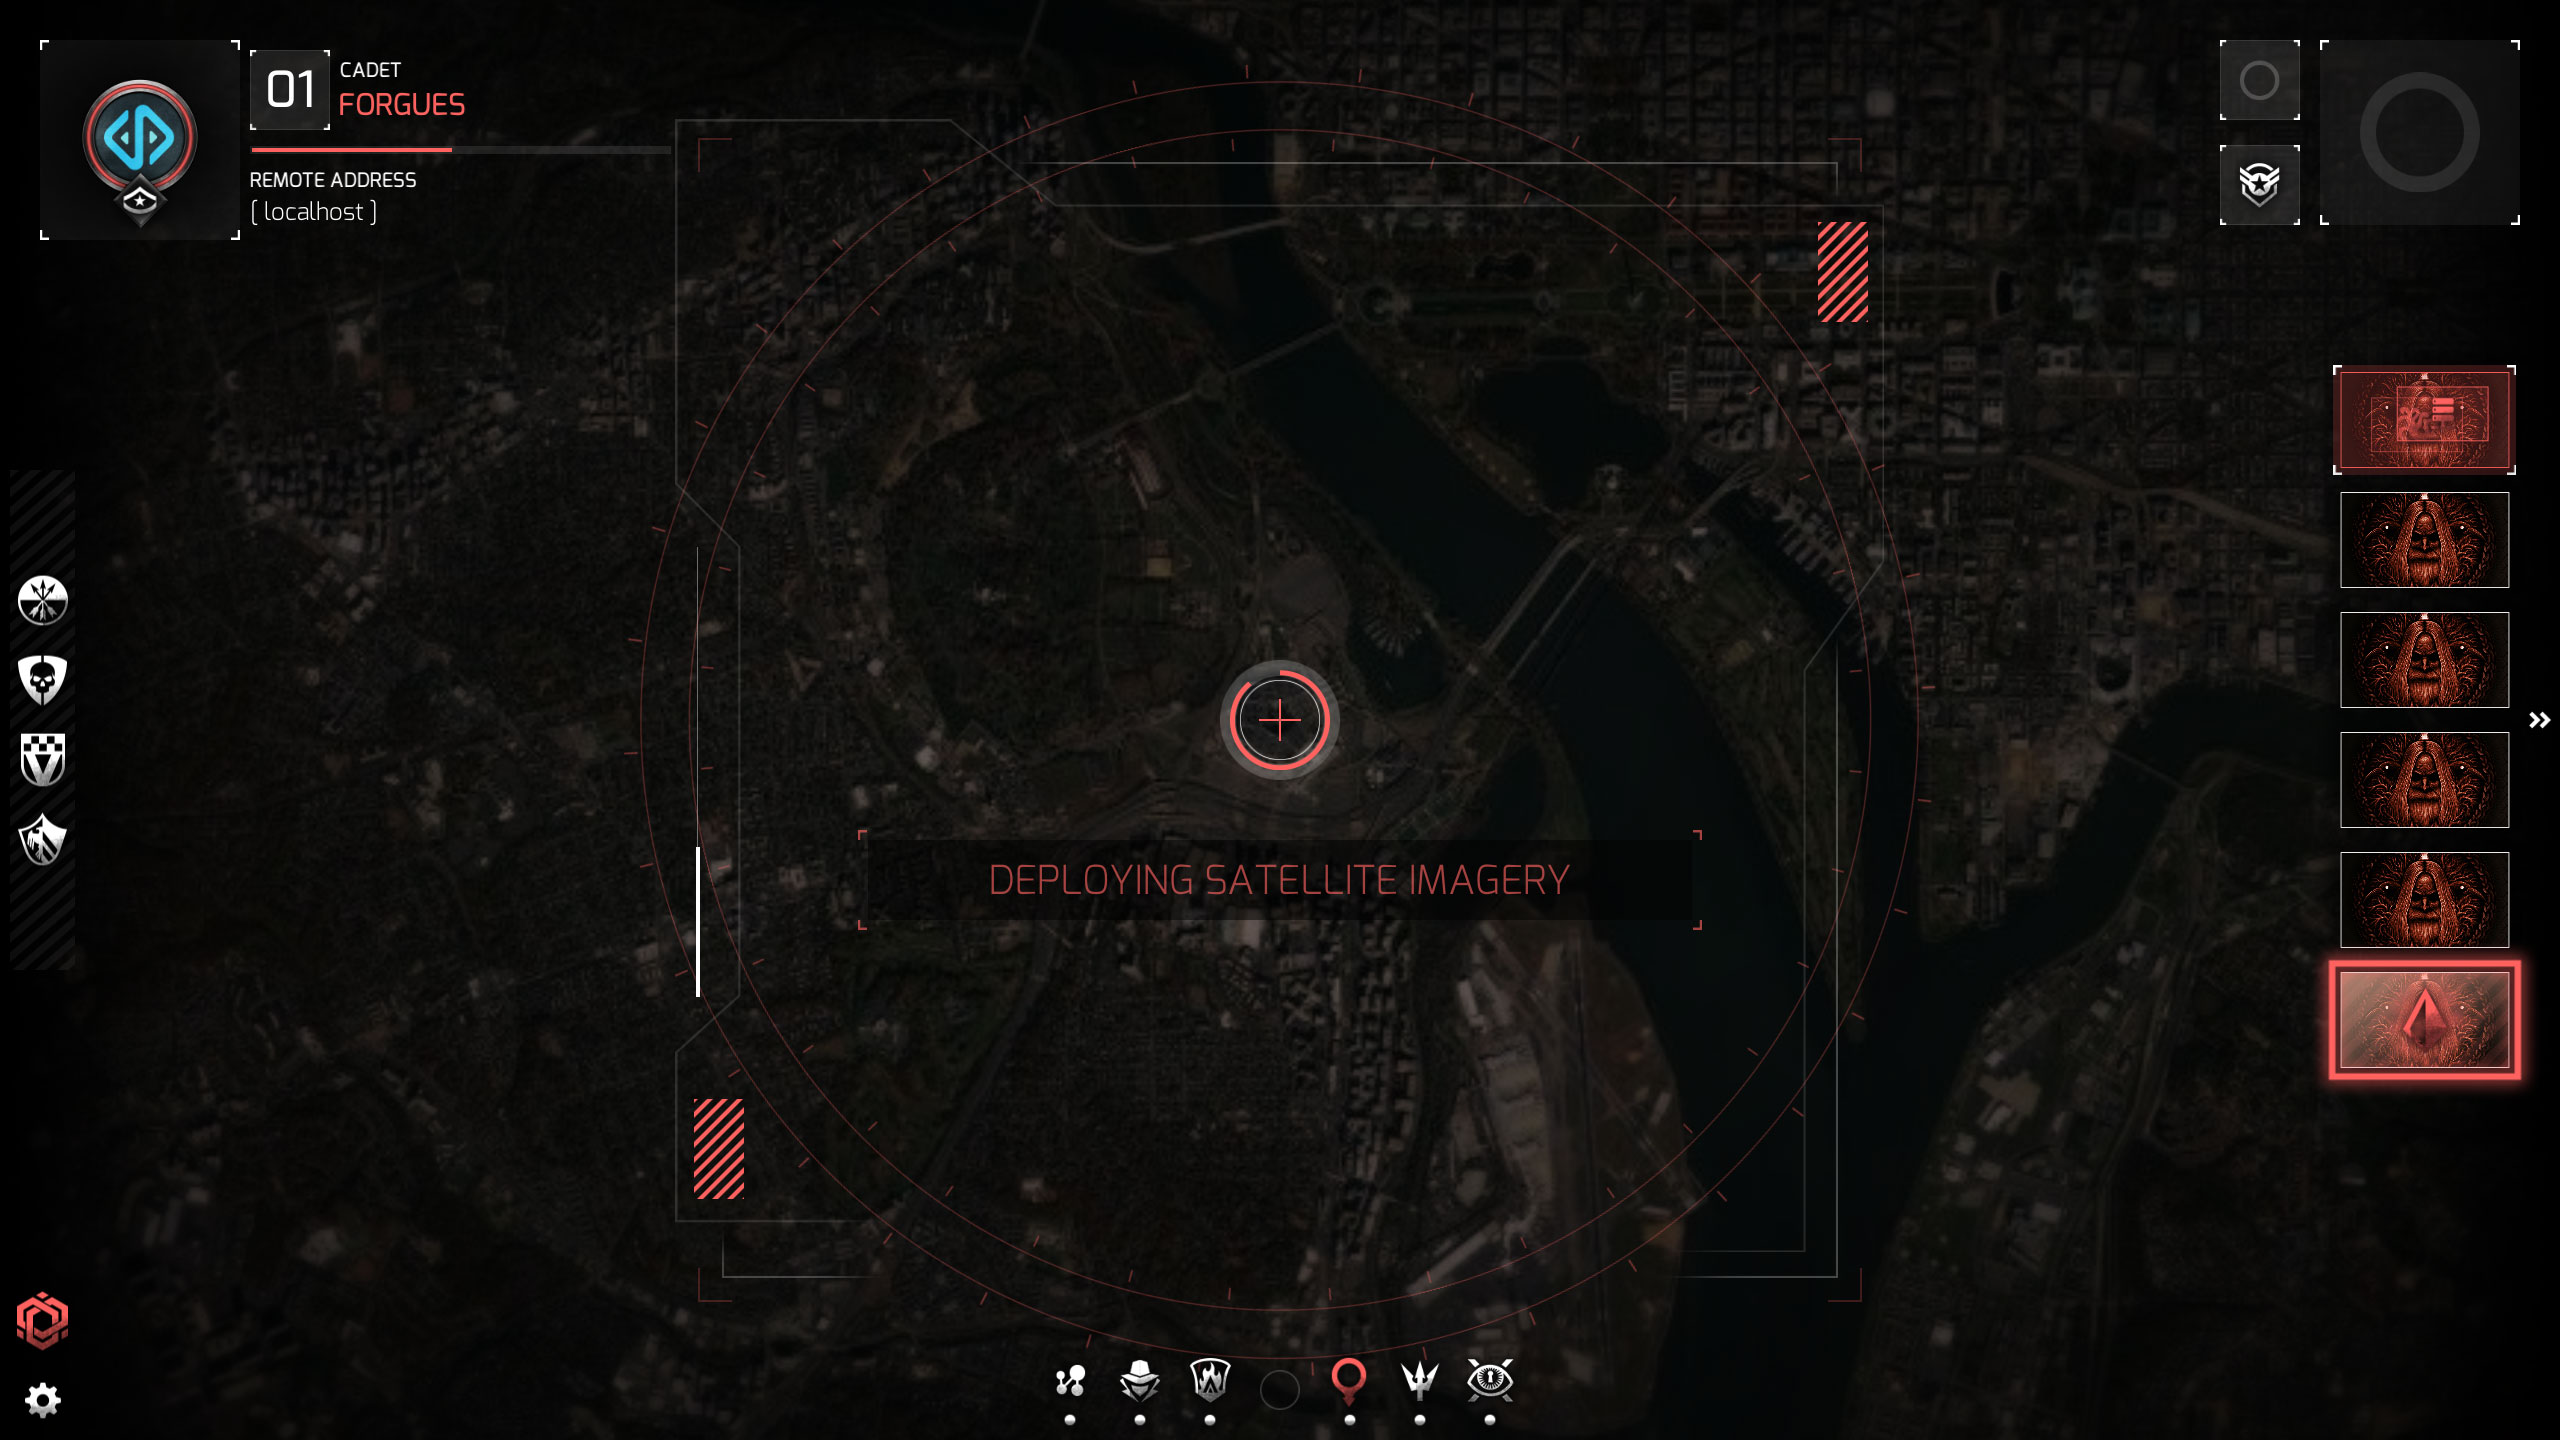 NITE Team 4 - Military Hacking Division screenshot